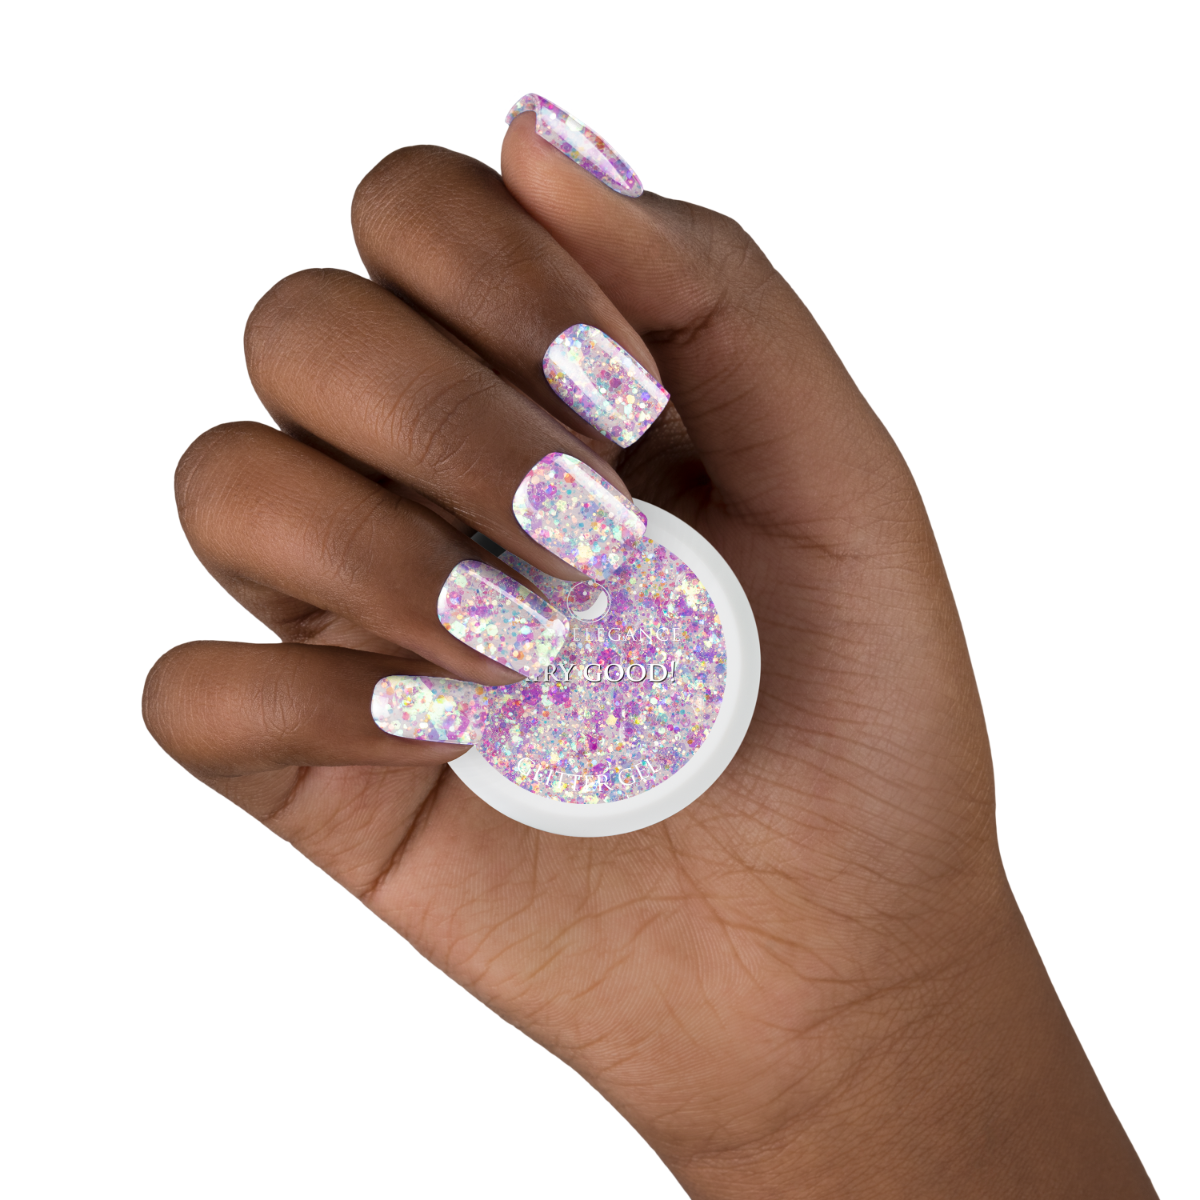 Light Elegance Glitter Gel - Fairy Good! :: New Packaging - Creata Beauty - Professional Beauty Products